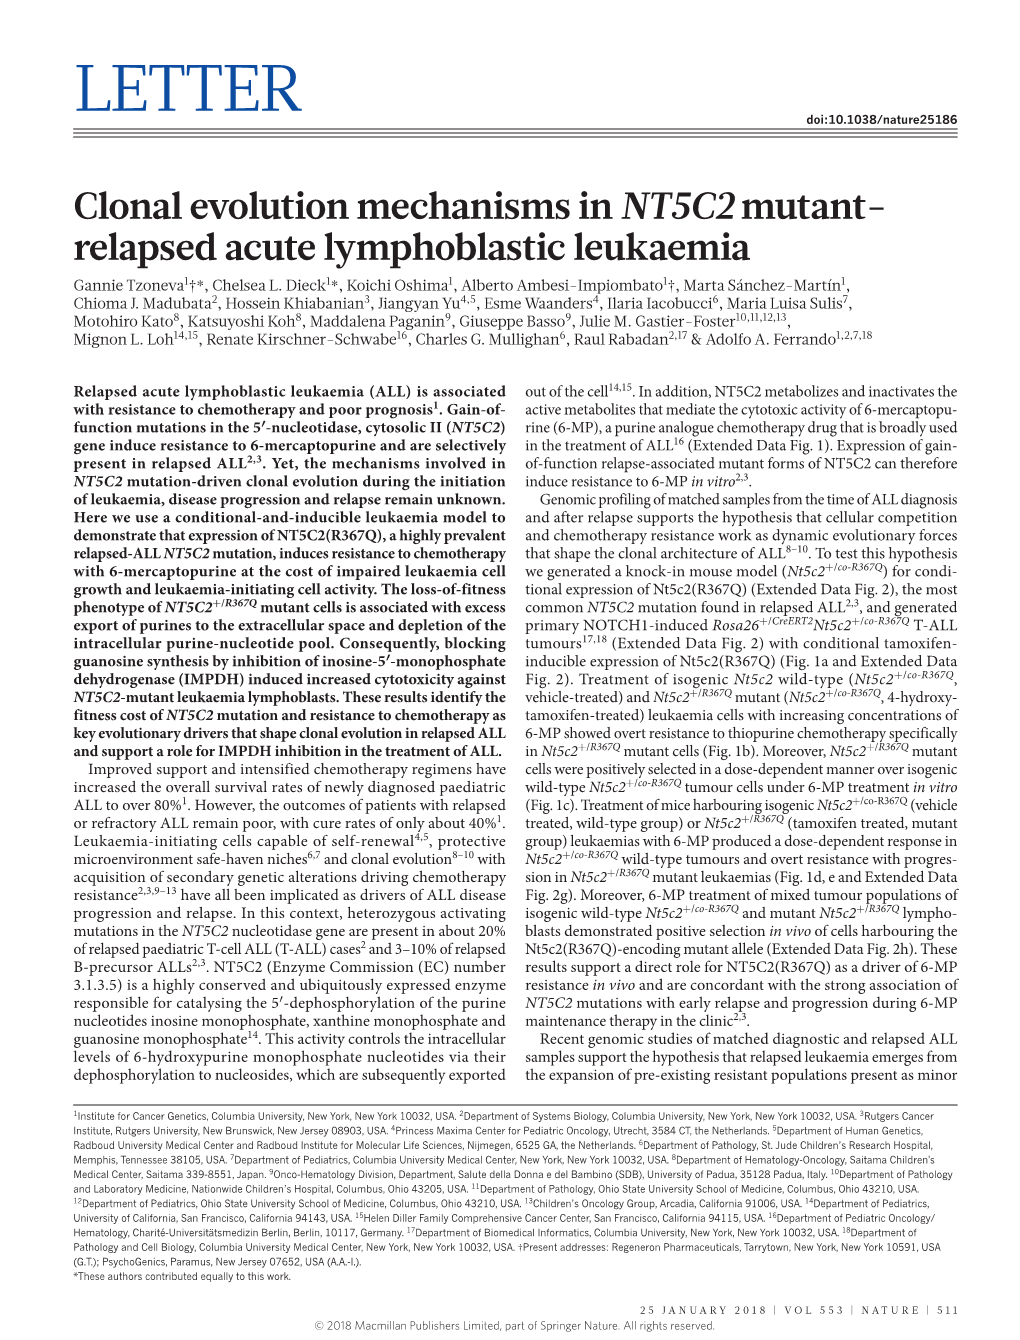 Clonal Evolution Mechanisms in NT5C2 Mutant- Relapsed Acute Lymphoblastic Leukaemia Gannie Tzoneva1†*, Chelsea L